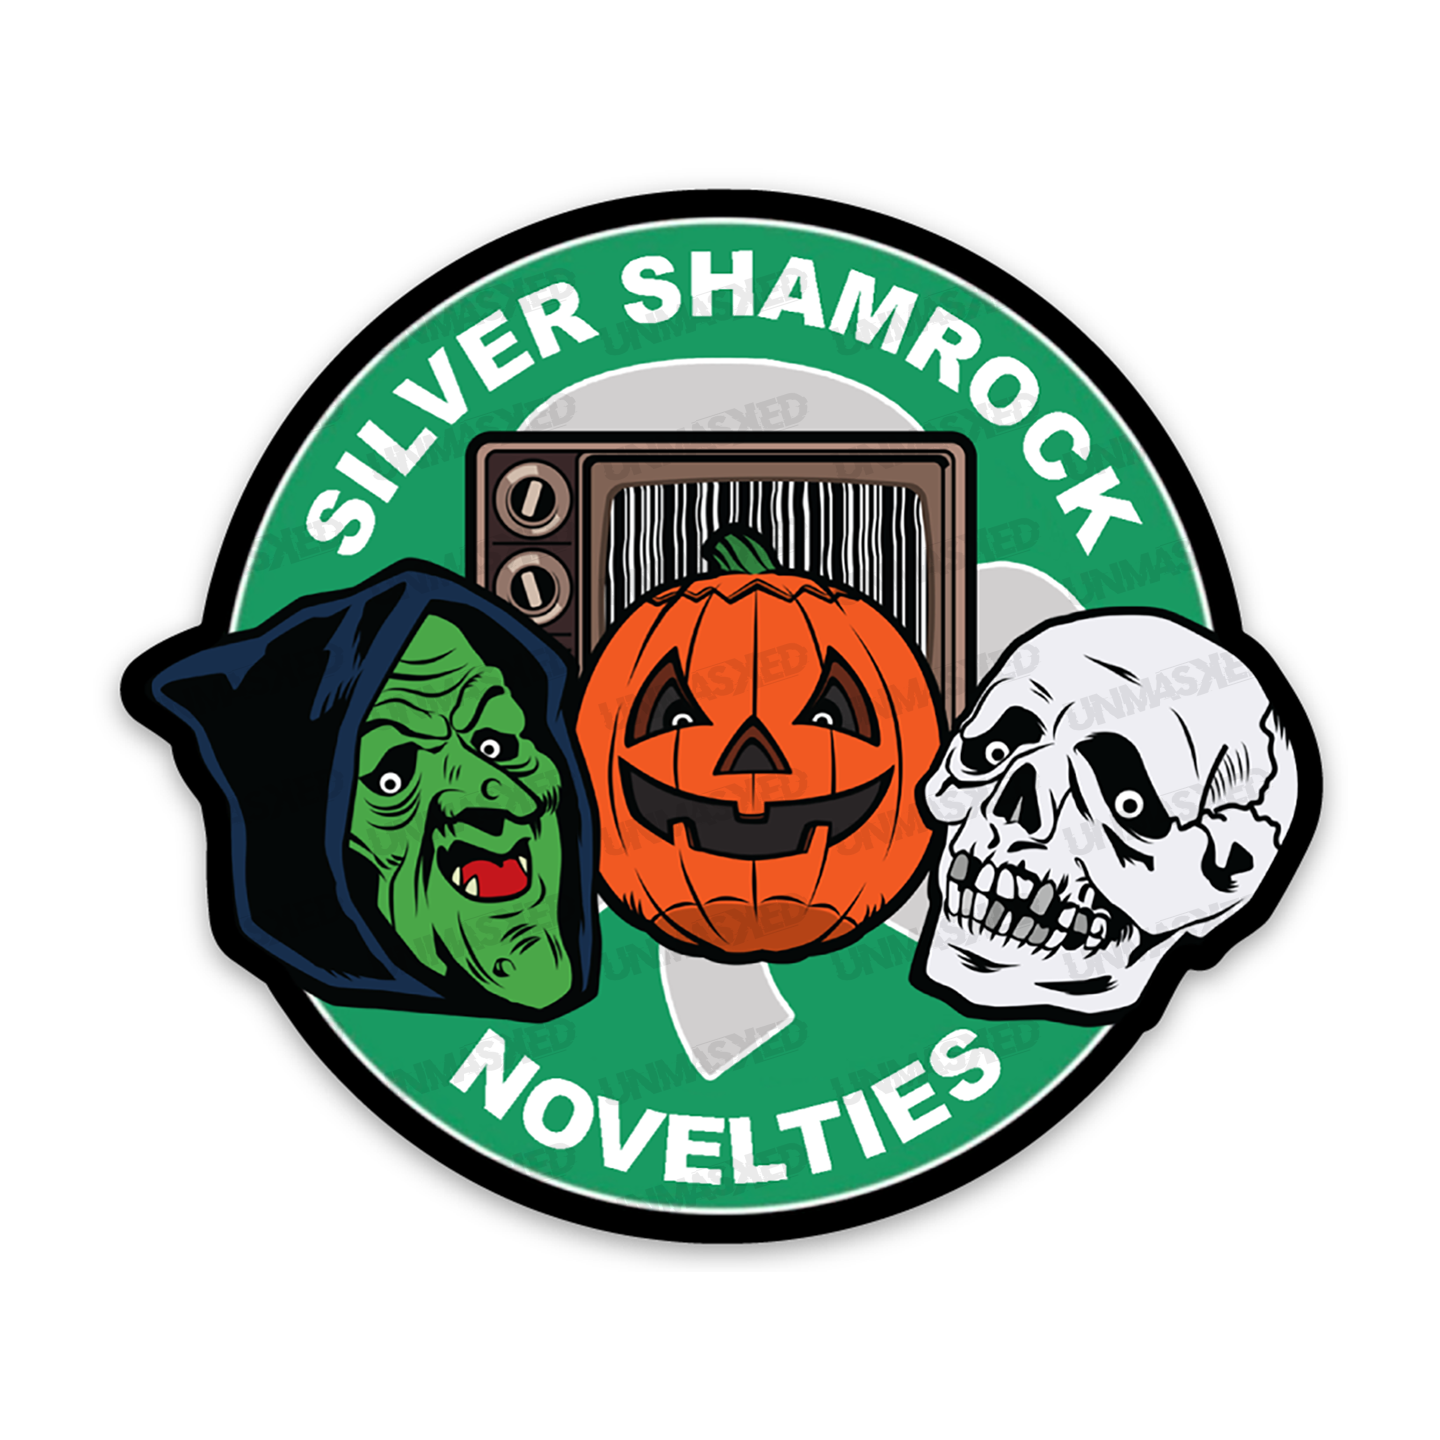 Silver Shamrock Novelties Sticker